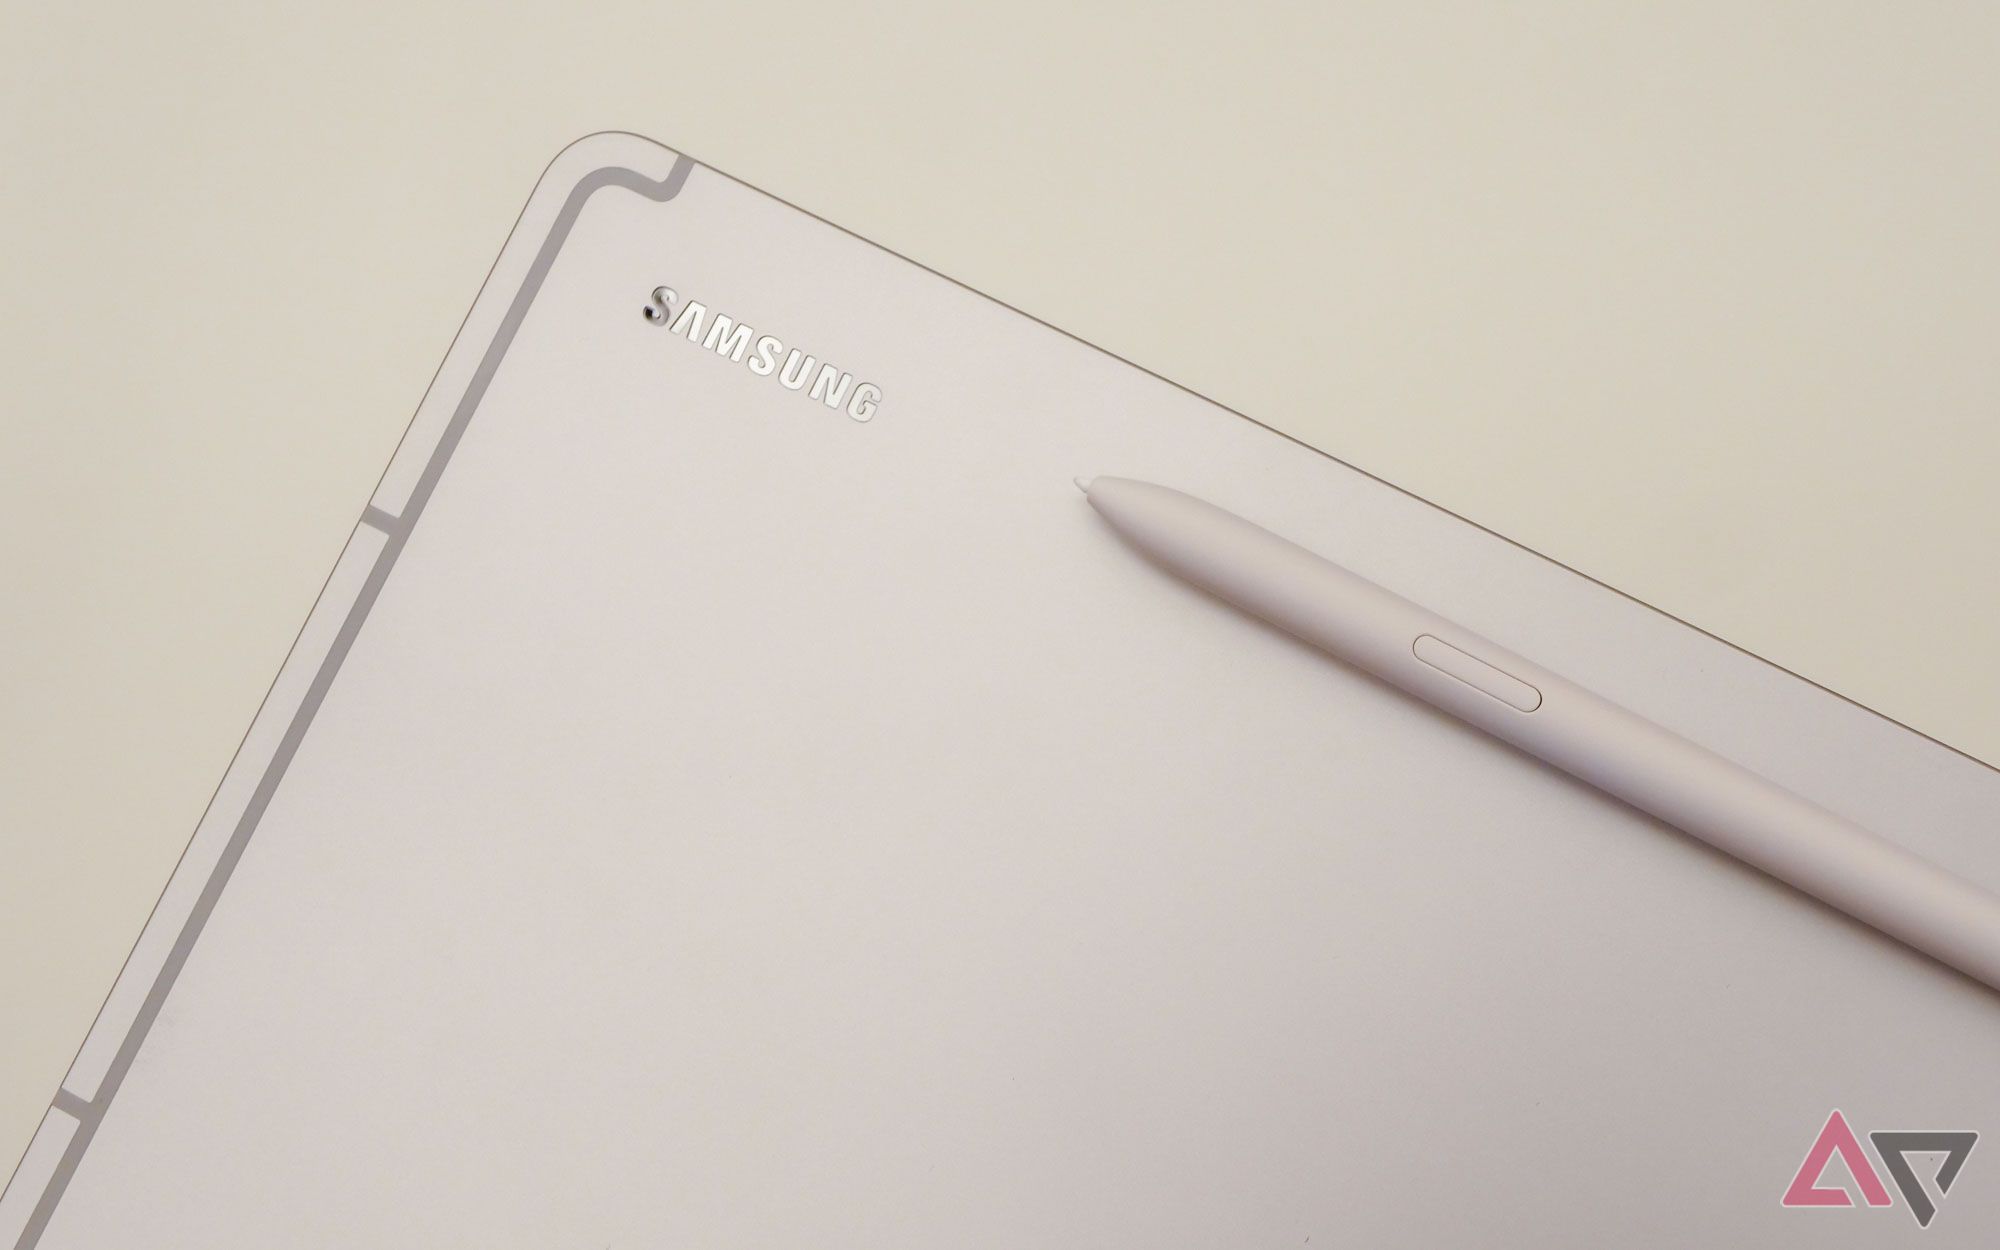 Samsung Galaxy Tab S9 FE and Buds FE announced -  news